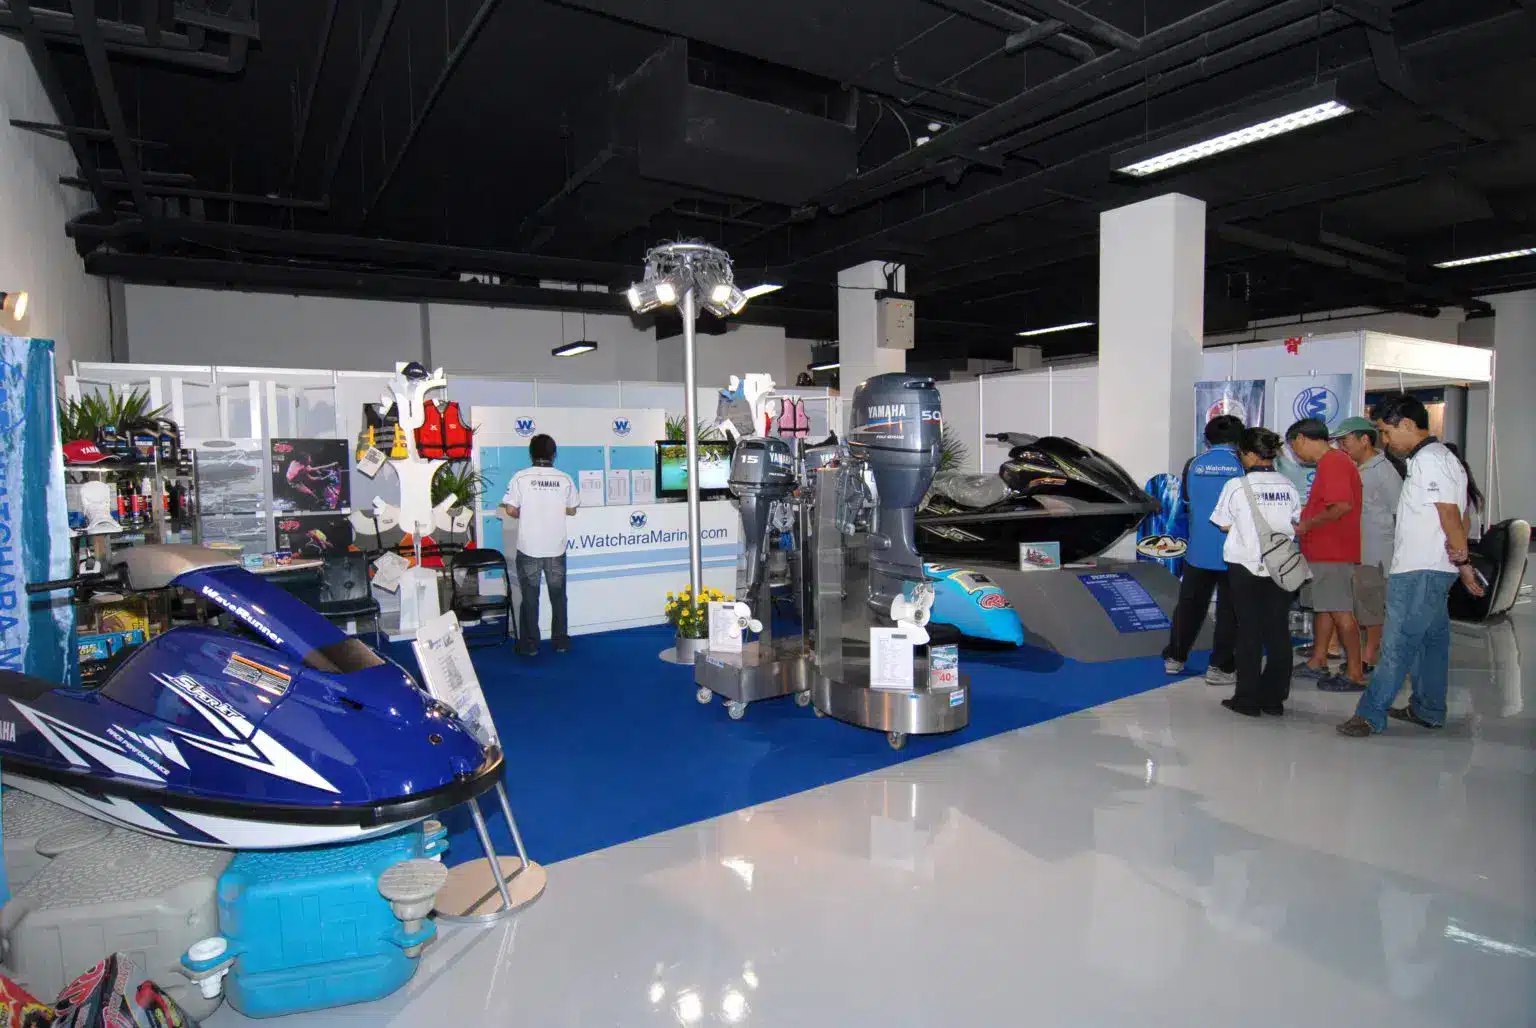 Royal Phuket Marina Exhibition Hall for Venue Space Rental